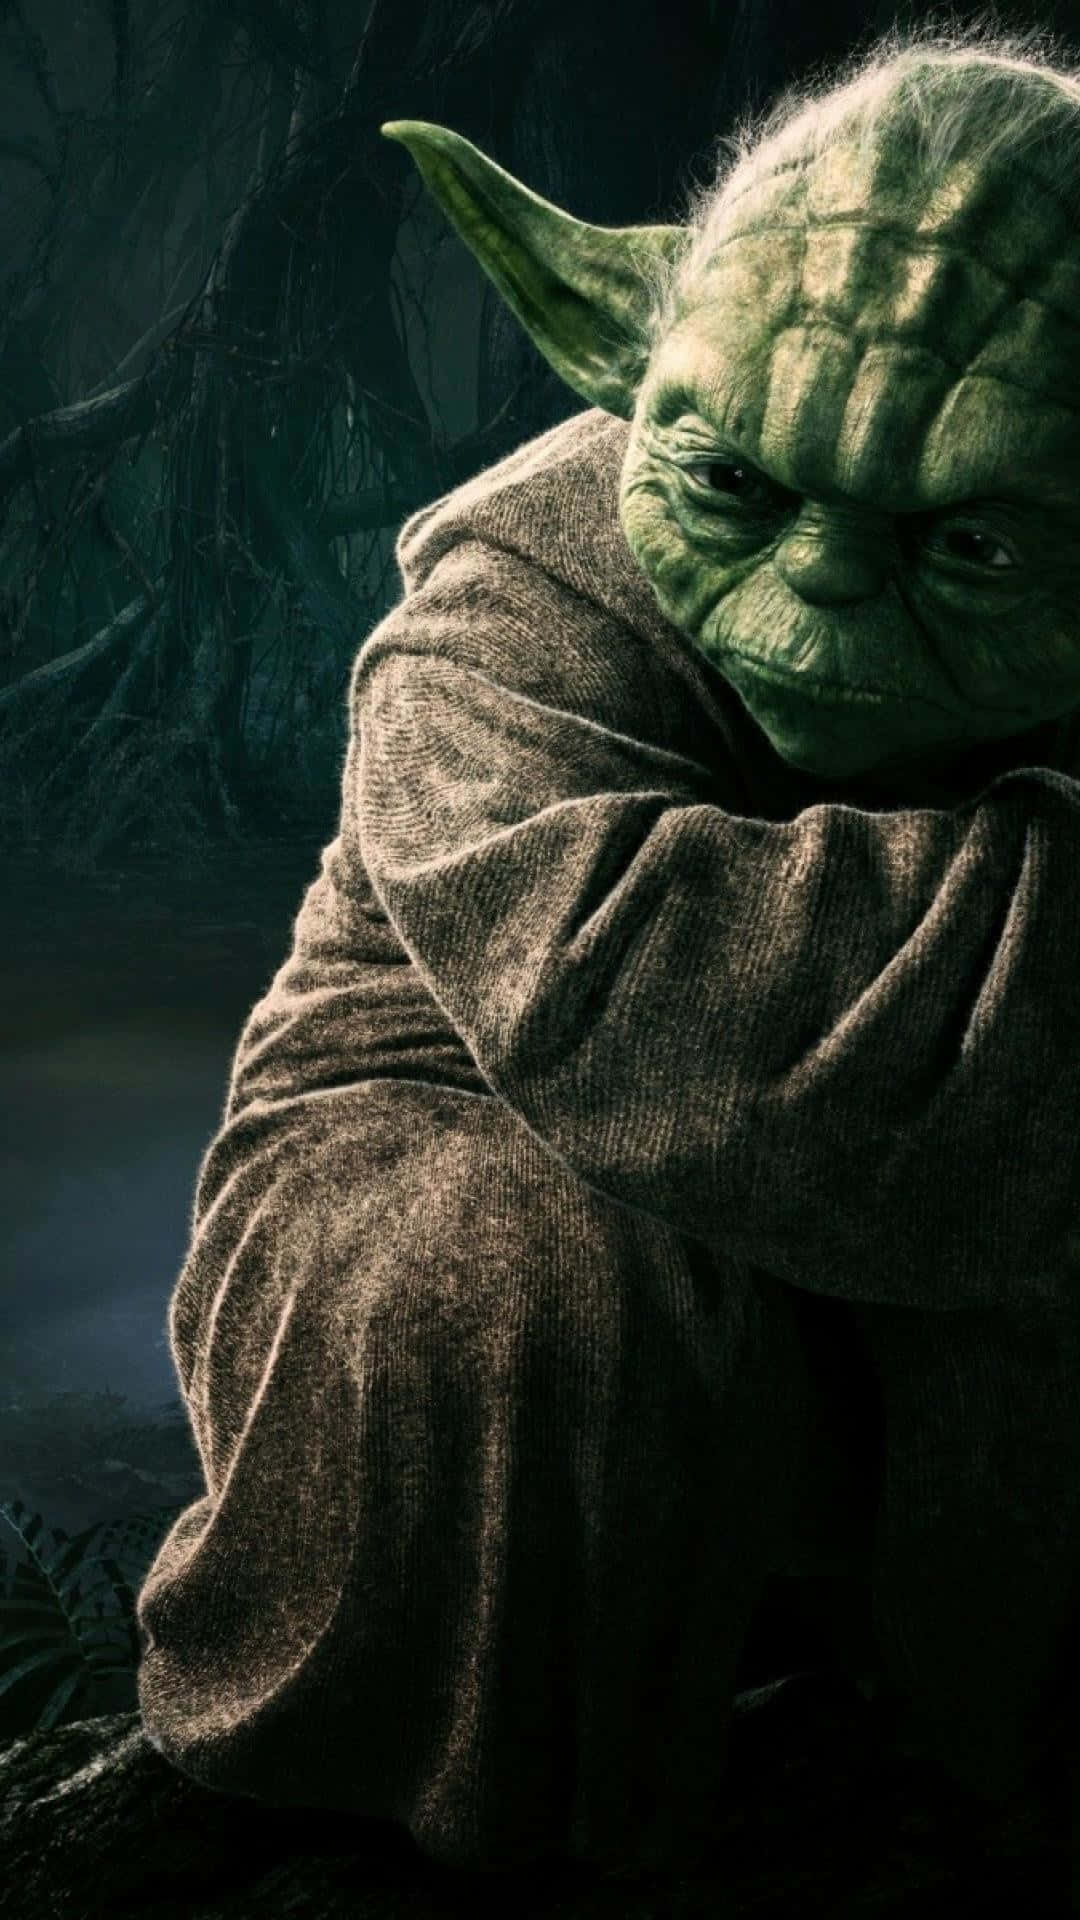 Starwars Jedi Master Yoda Bakgrund.